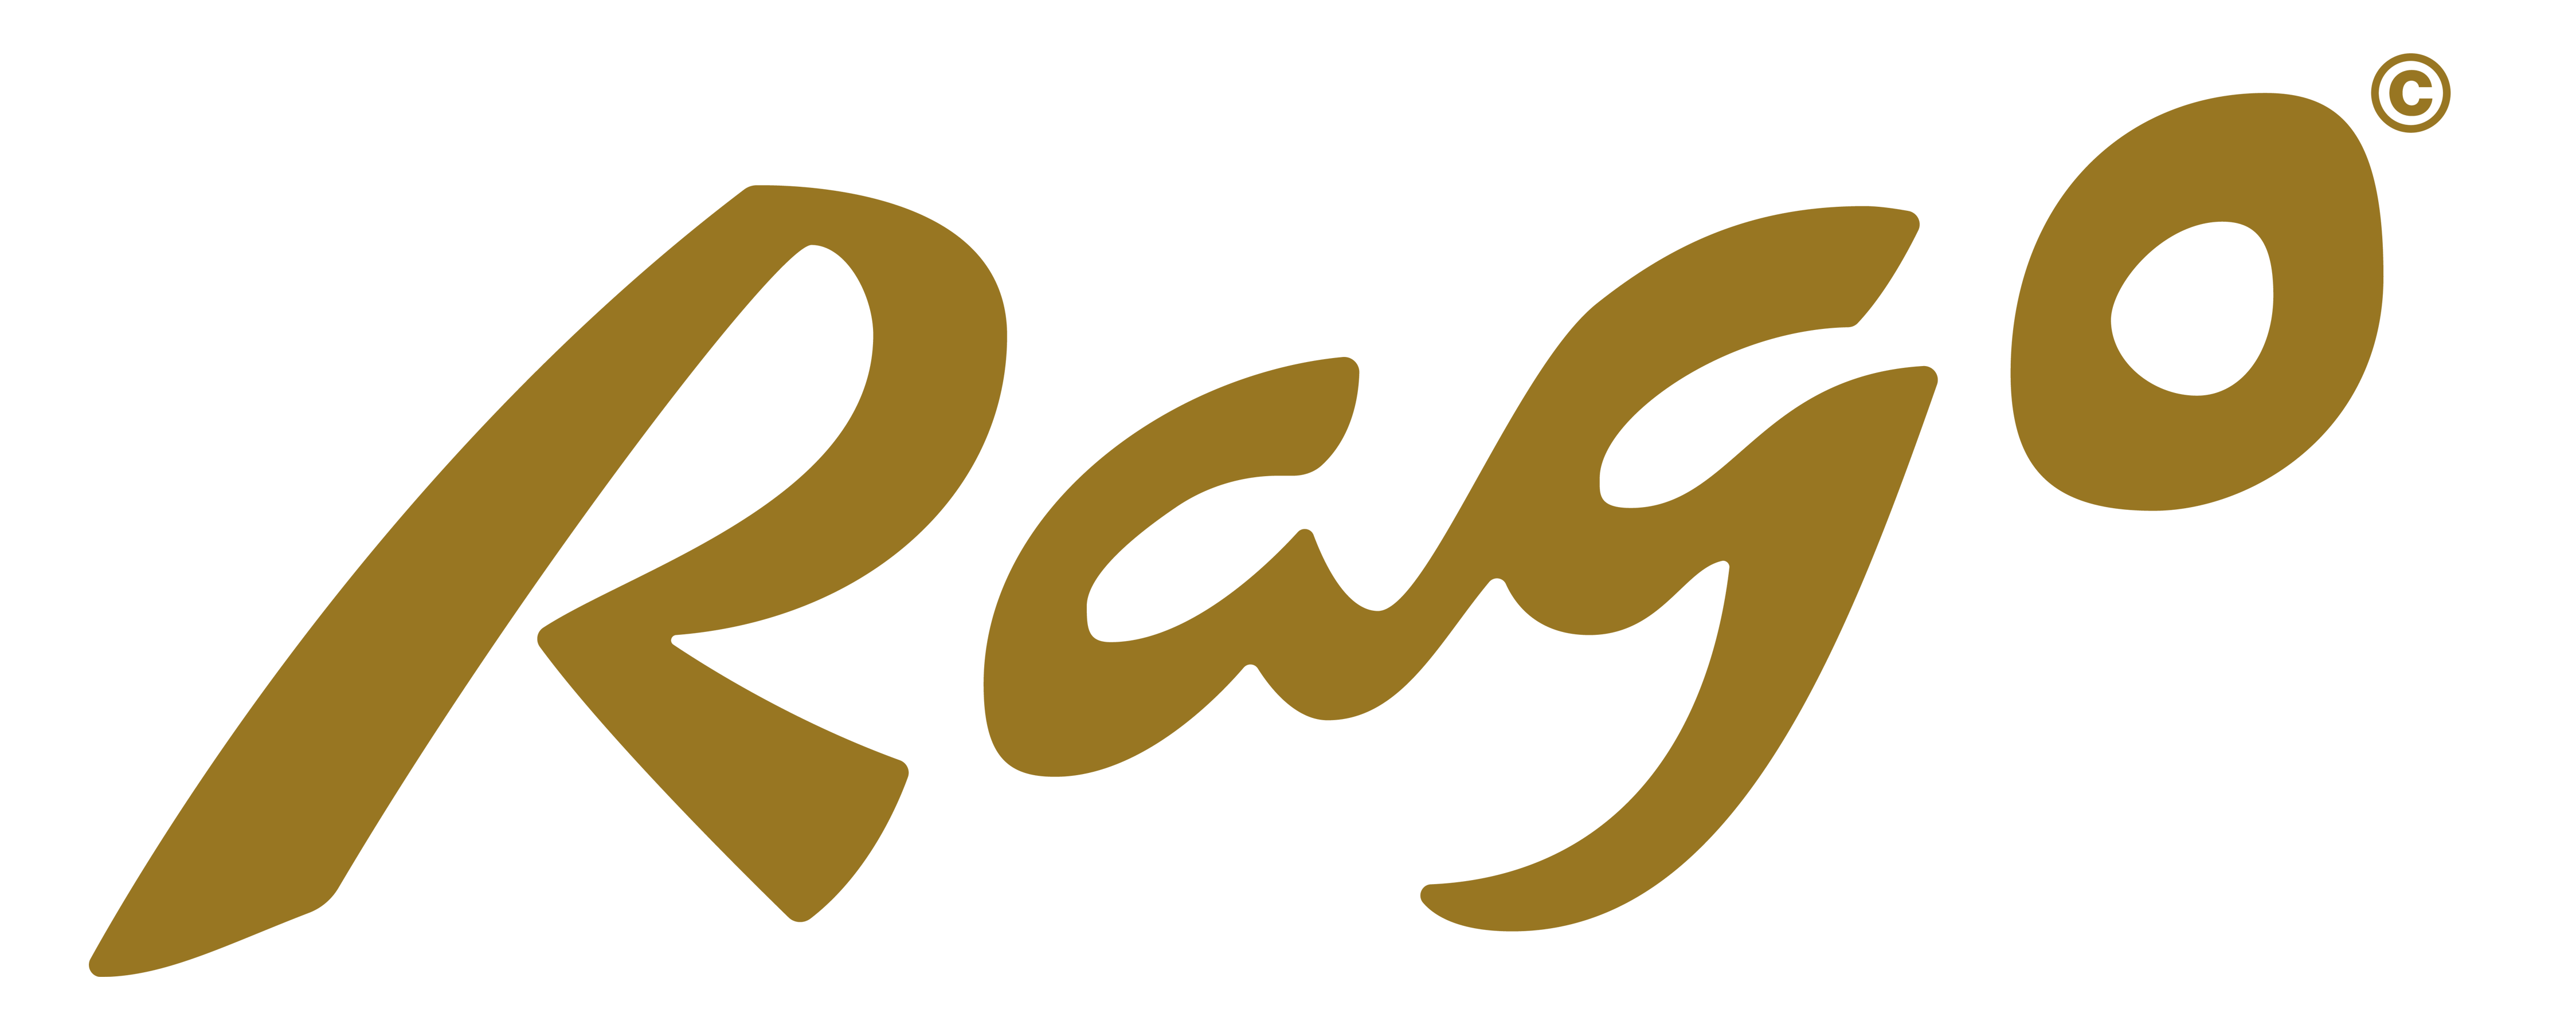 Rago Shapewear - Las Vegas International Lingerie Show 2013 